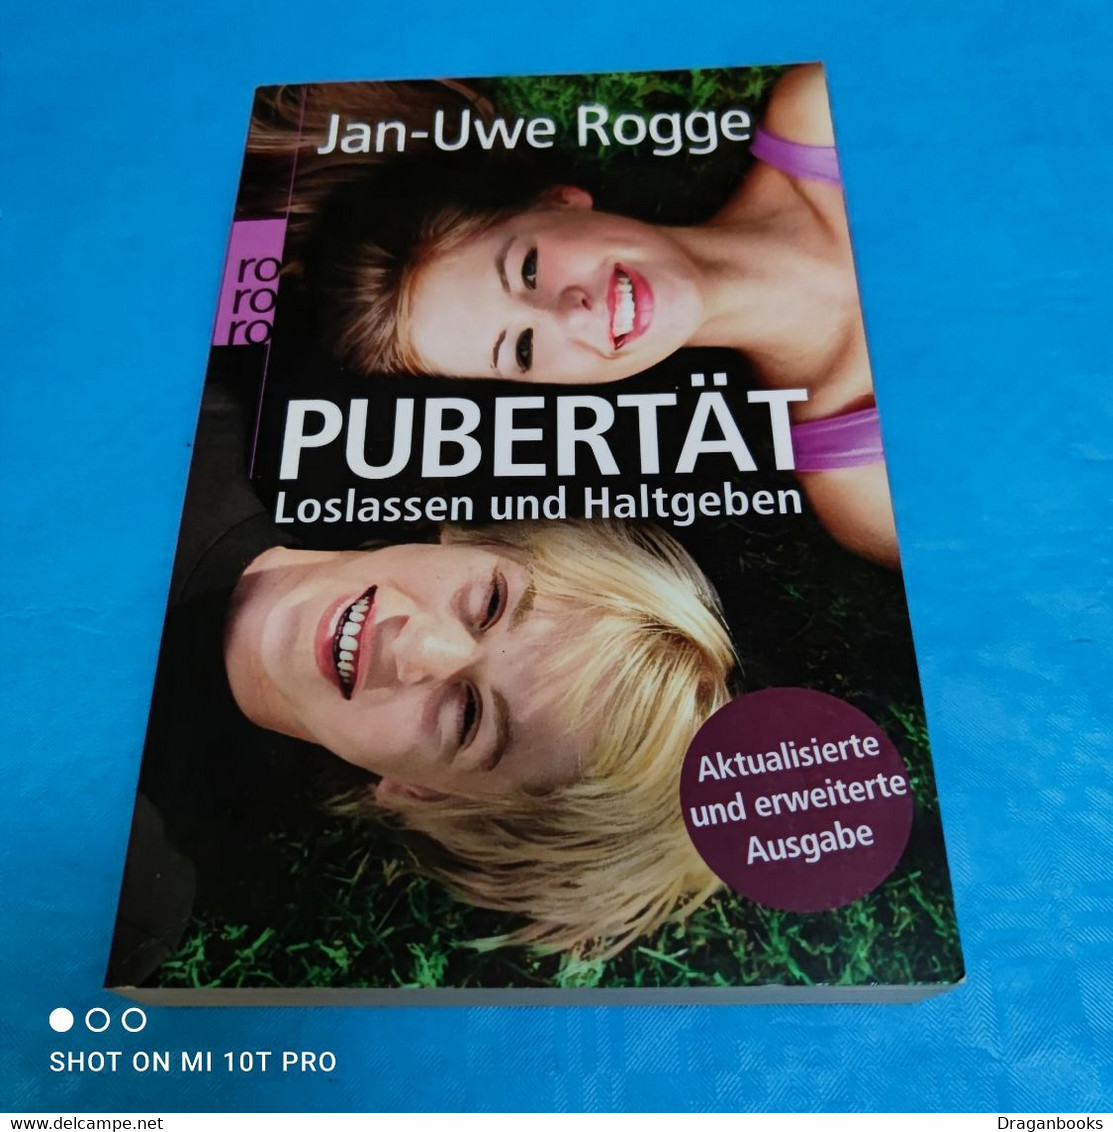 Jan-Uwe Rogge - Pubertät - Psychology